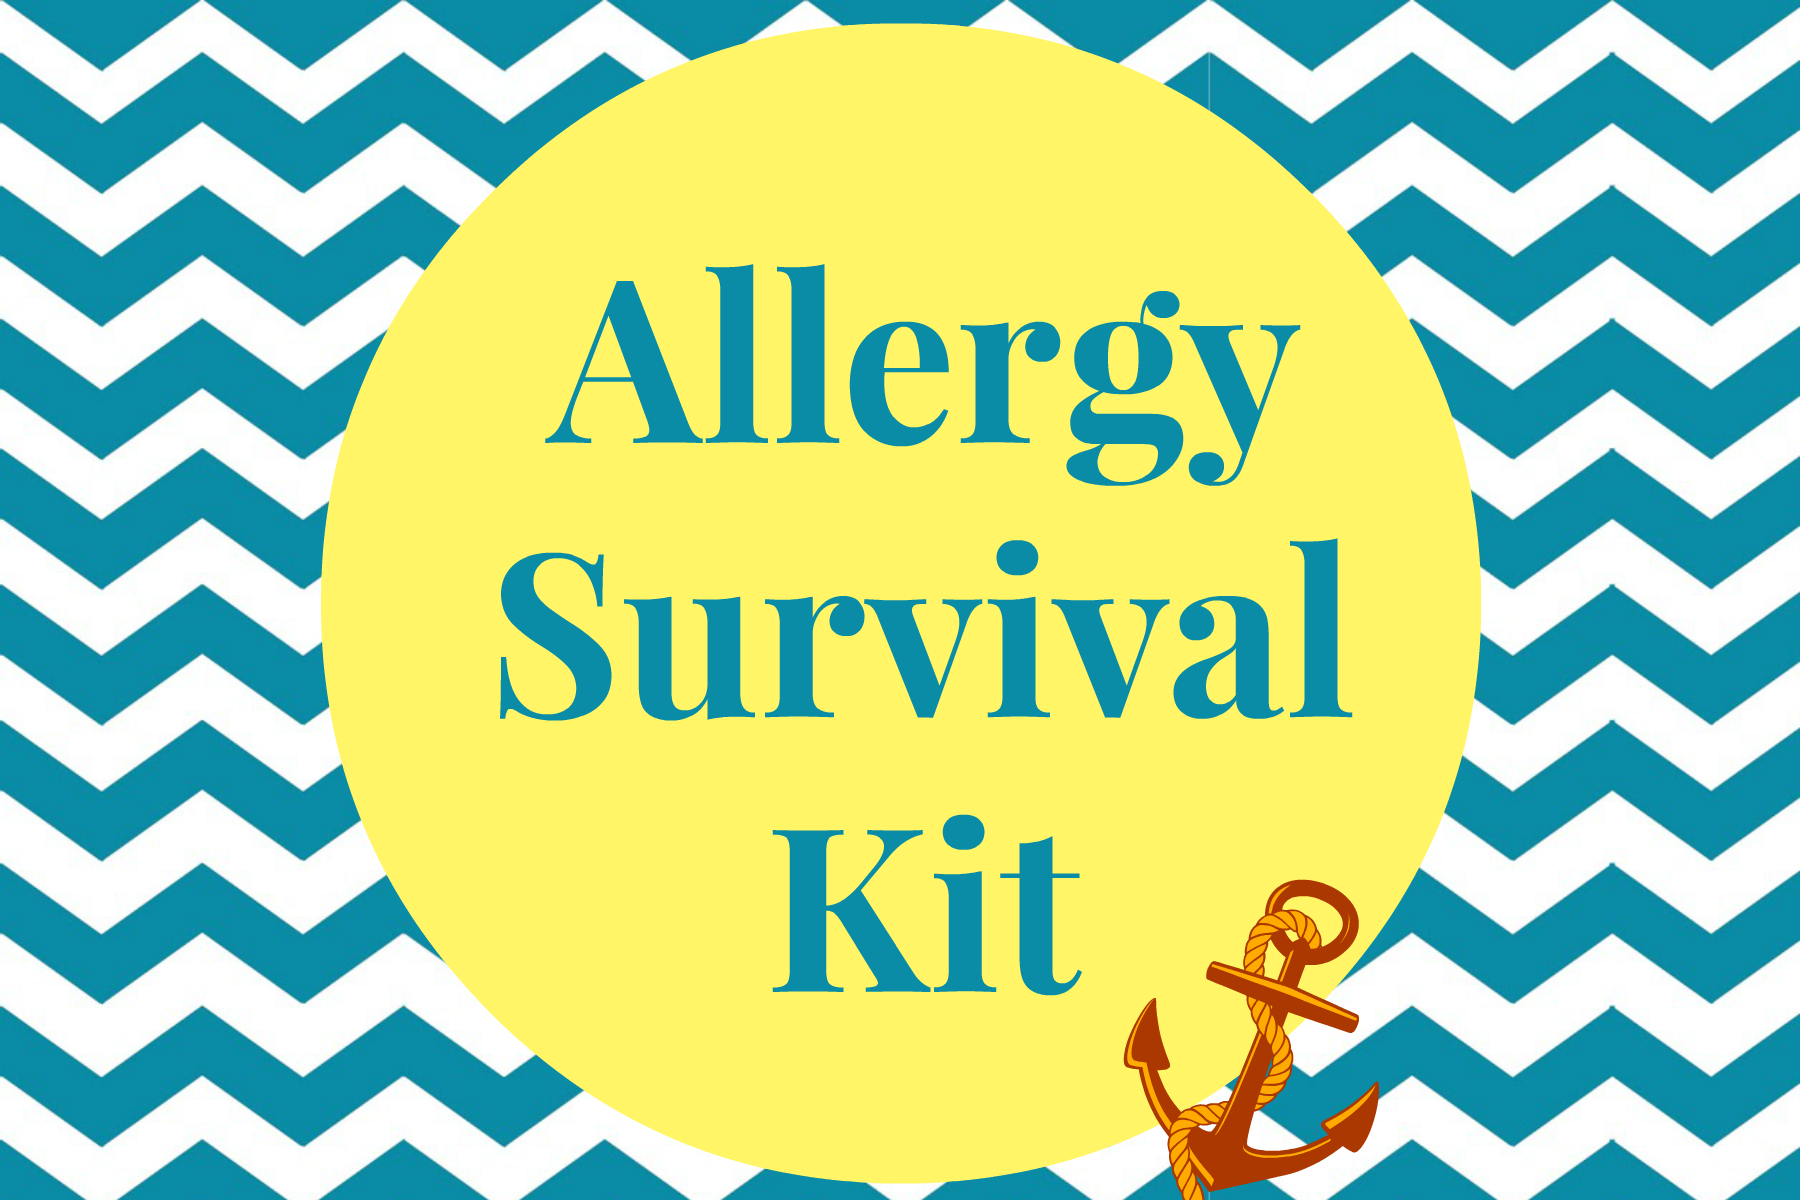 Allergy issues survival kit